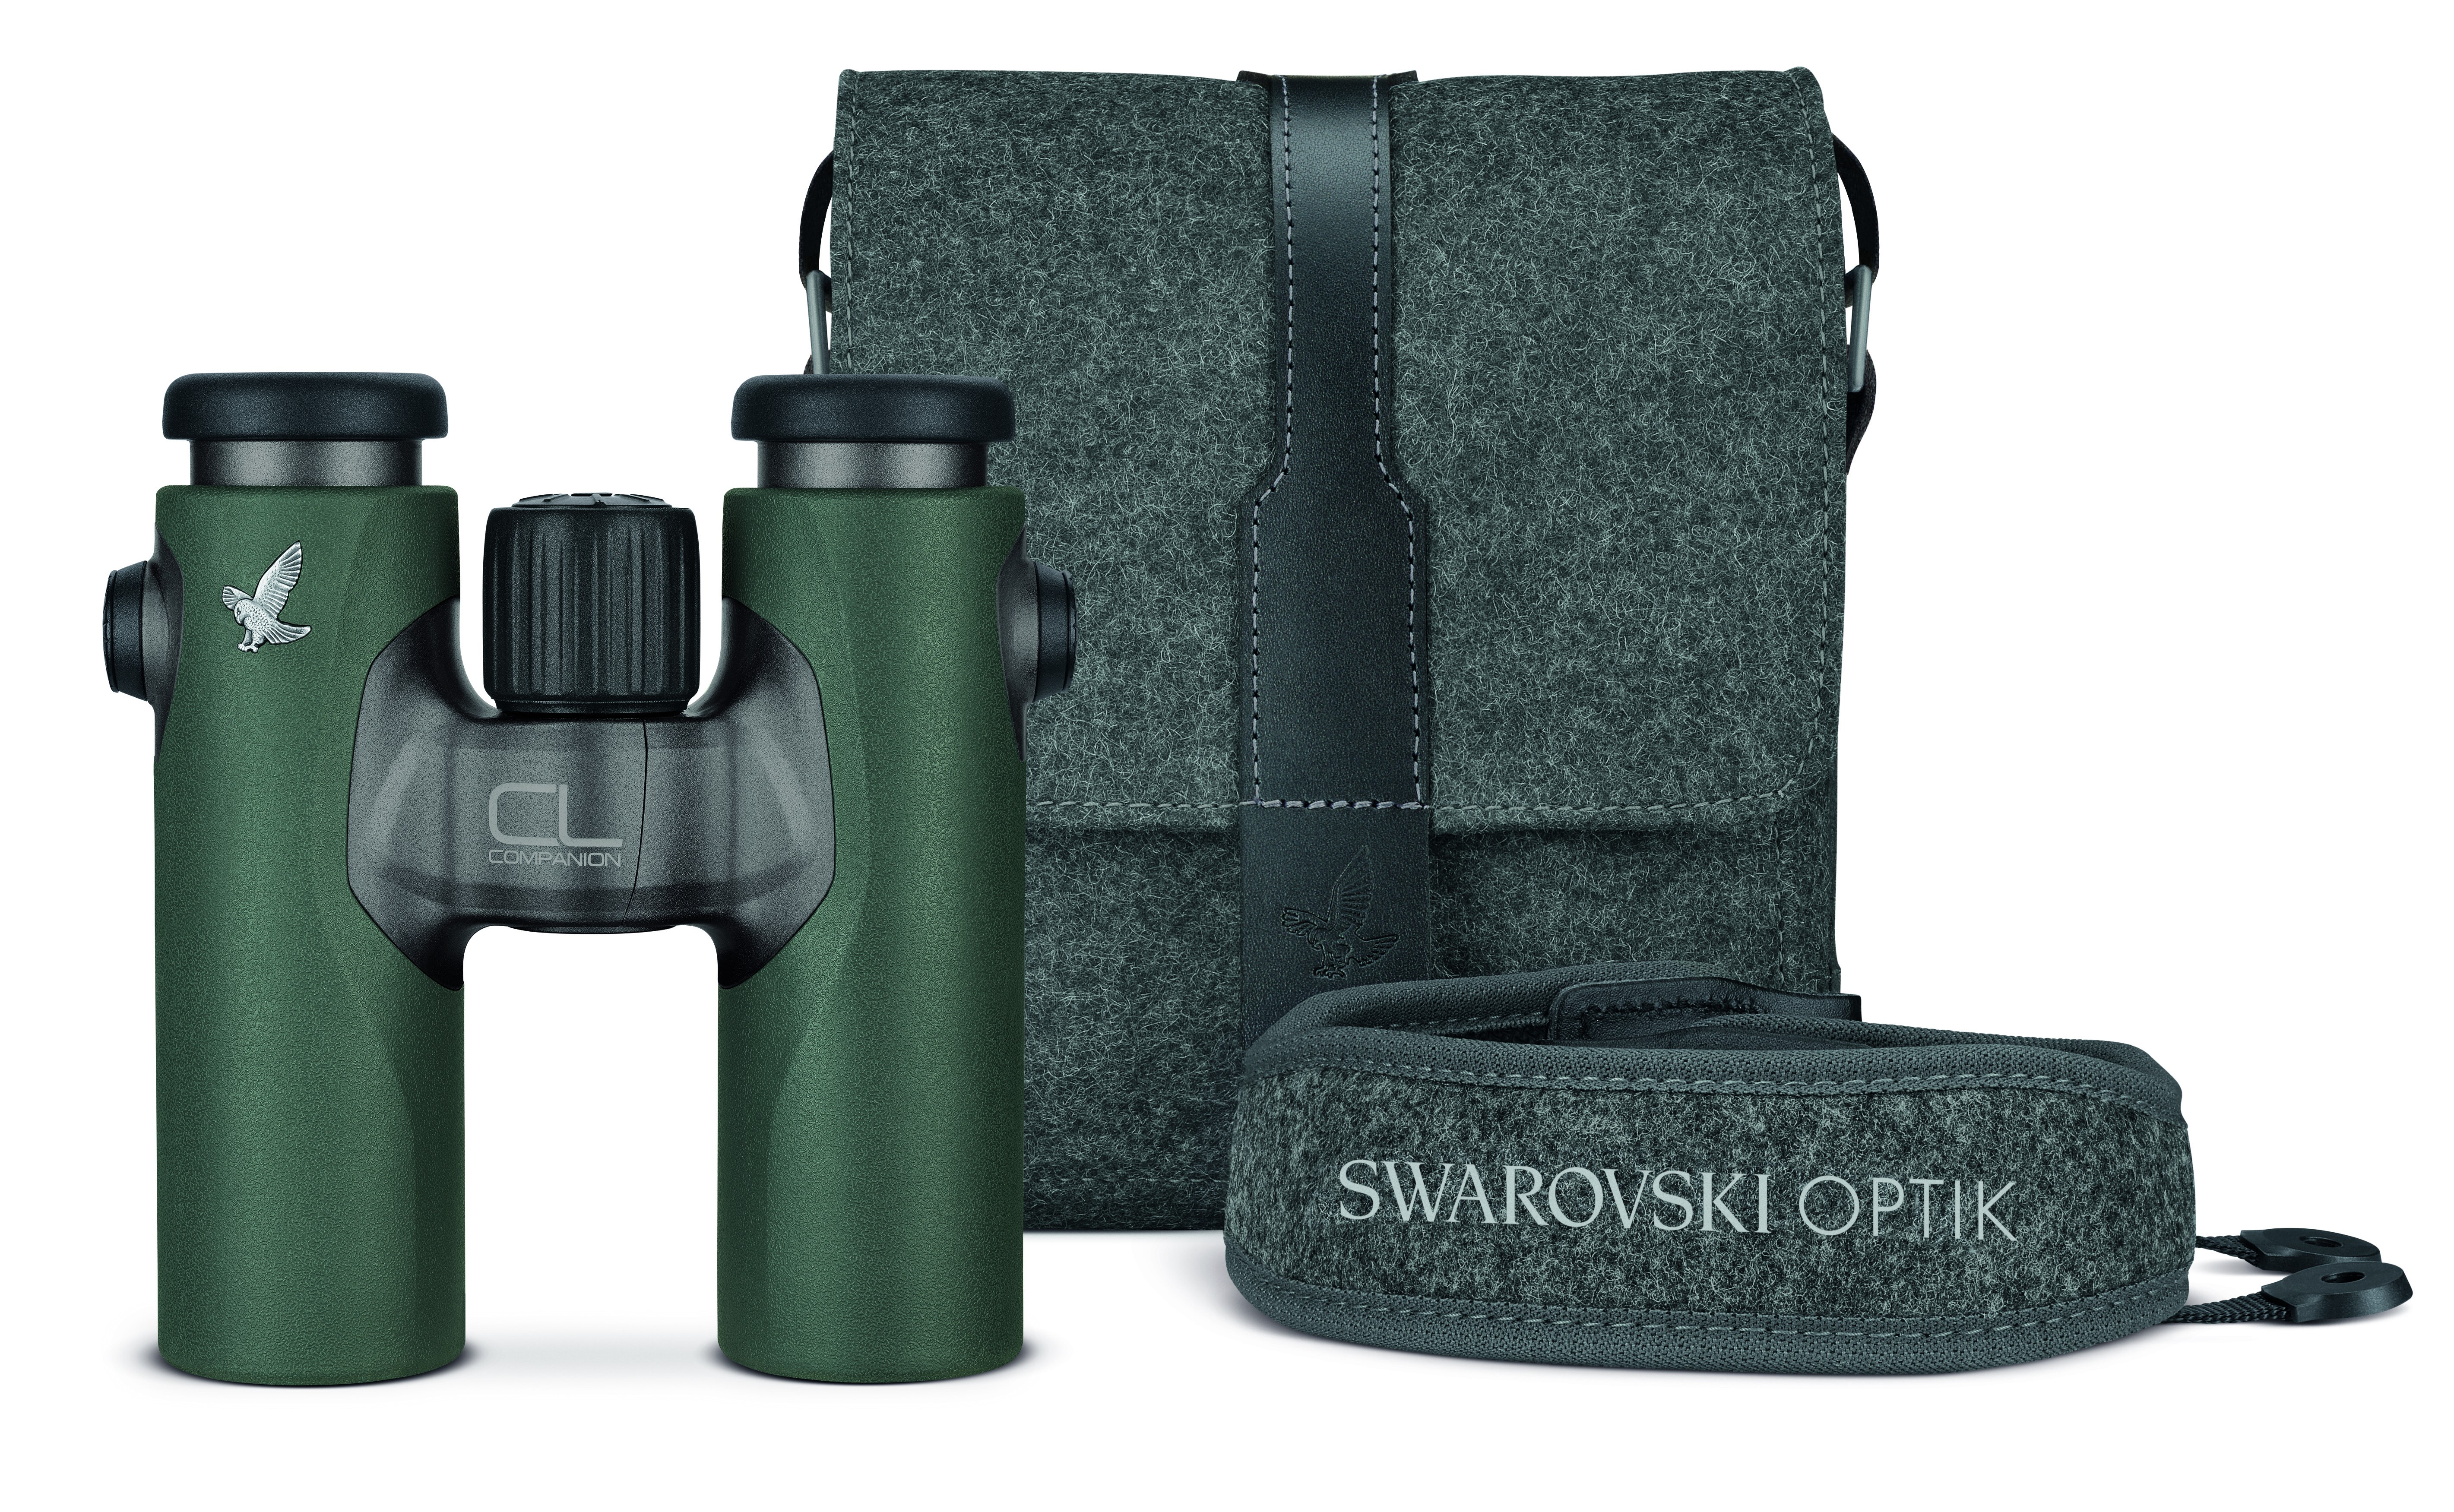 Swarovski CL Companion 10x30 Green - Northern Lights package